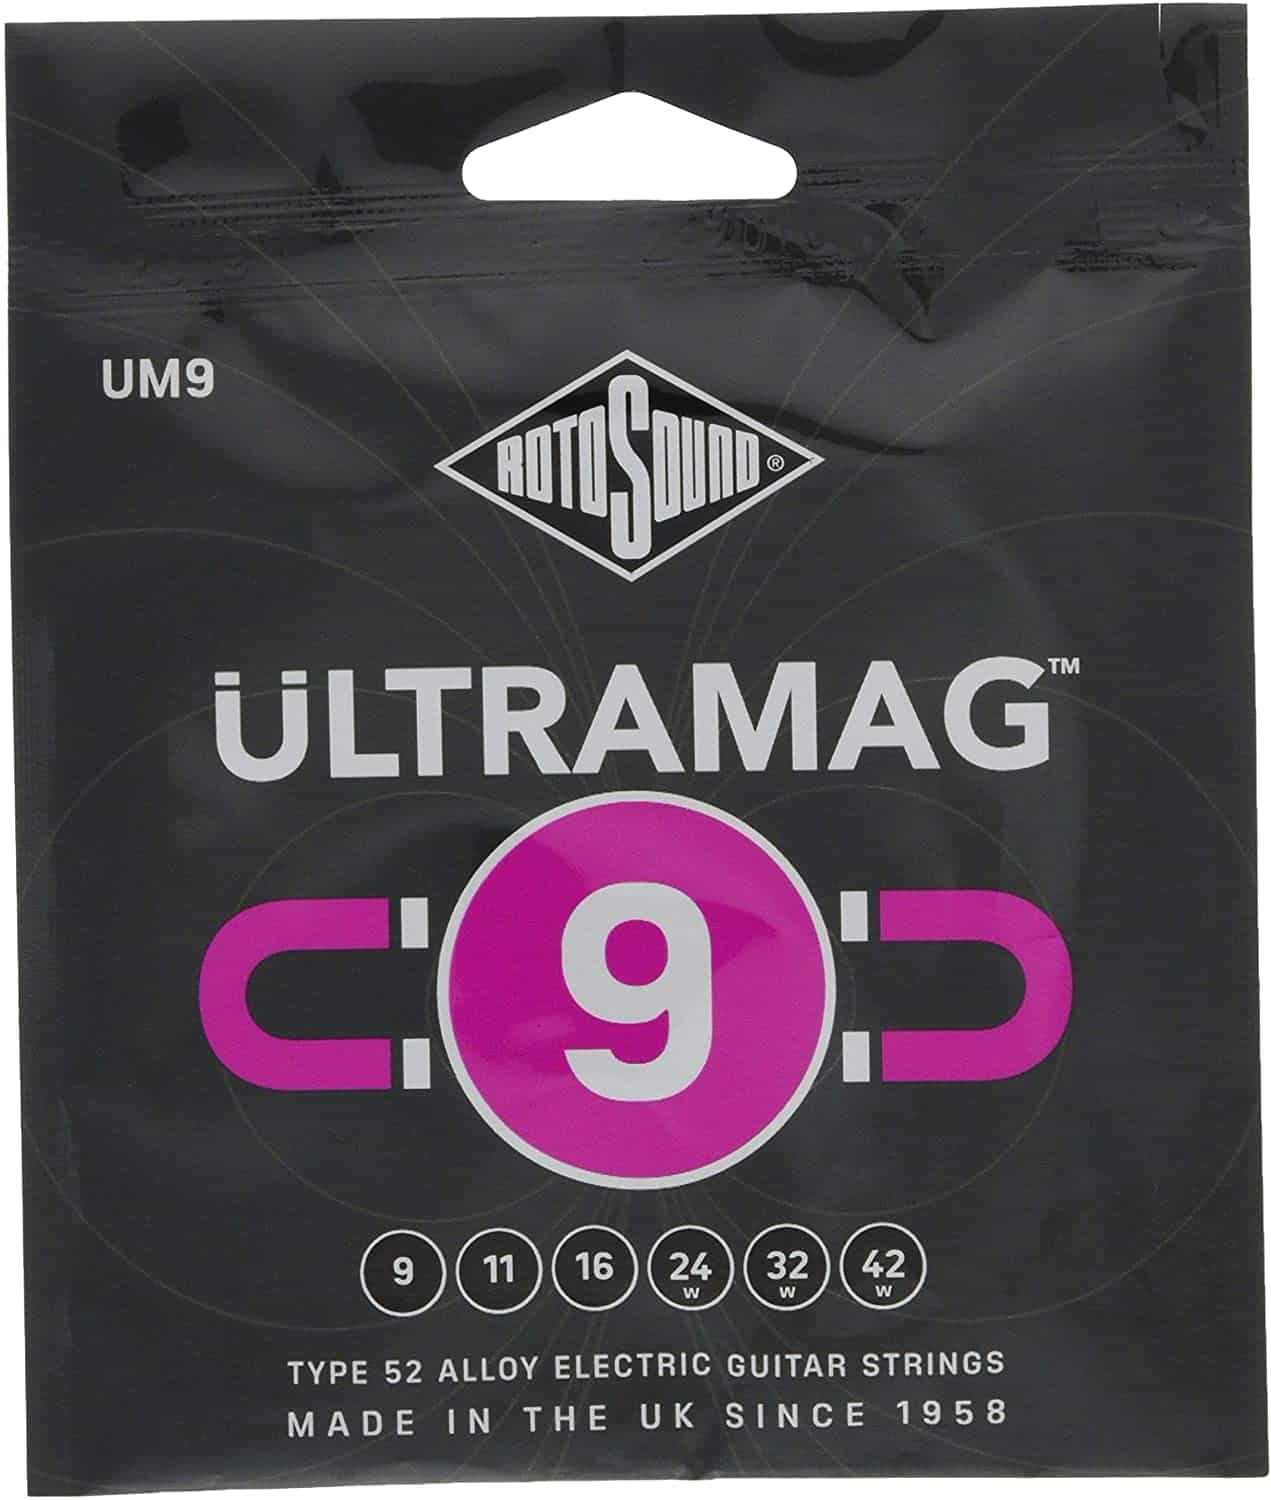 Most innovative brand: Rotosound Ultramag